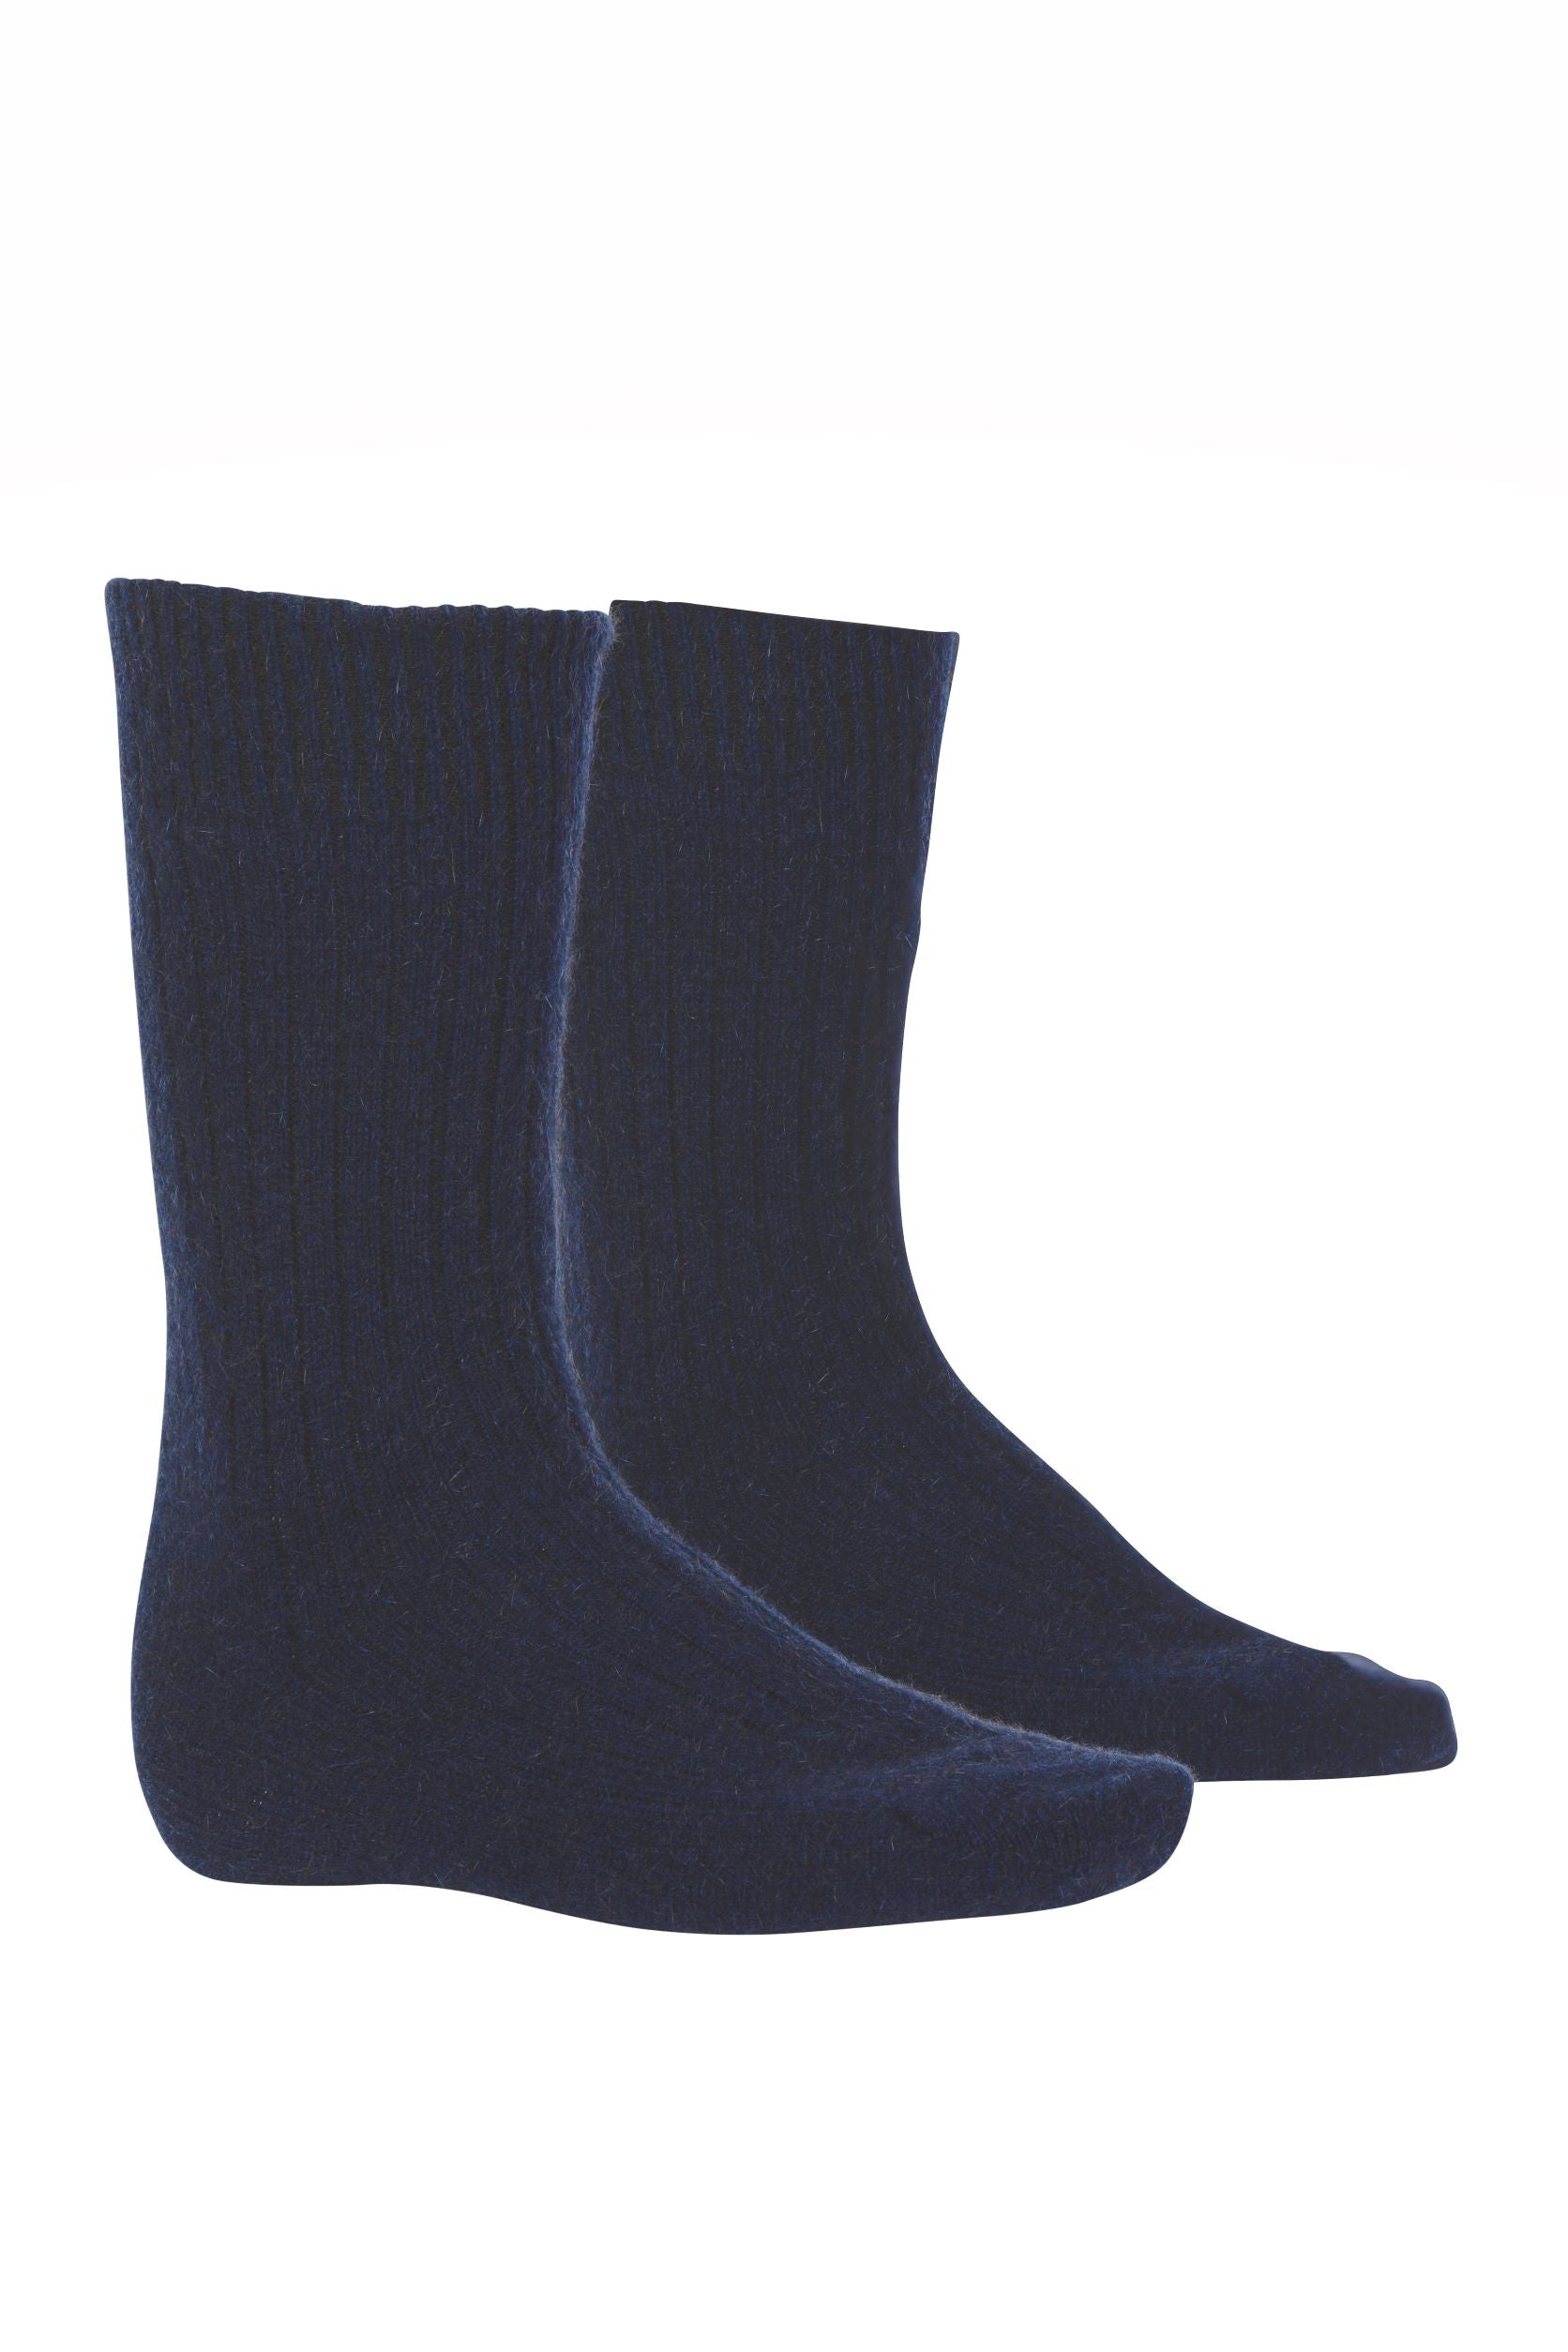 Possum Merino Unisex Socks - MKM Knitwear